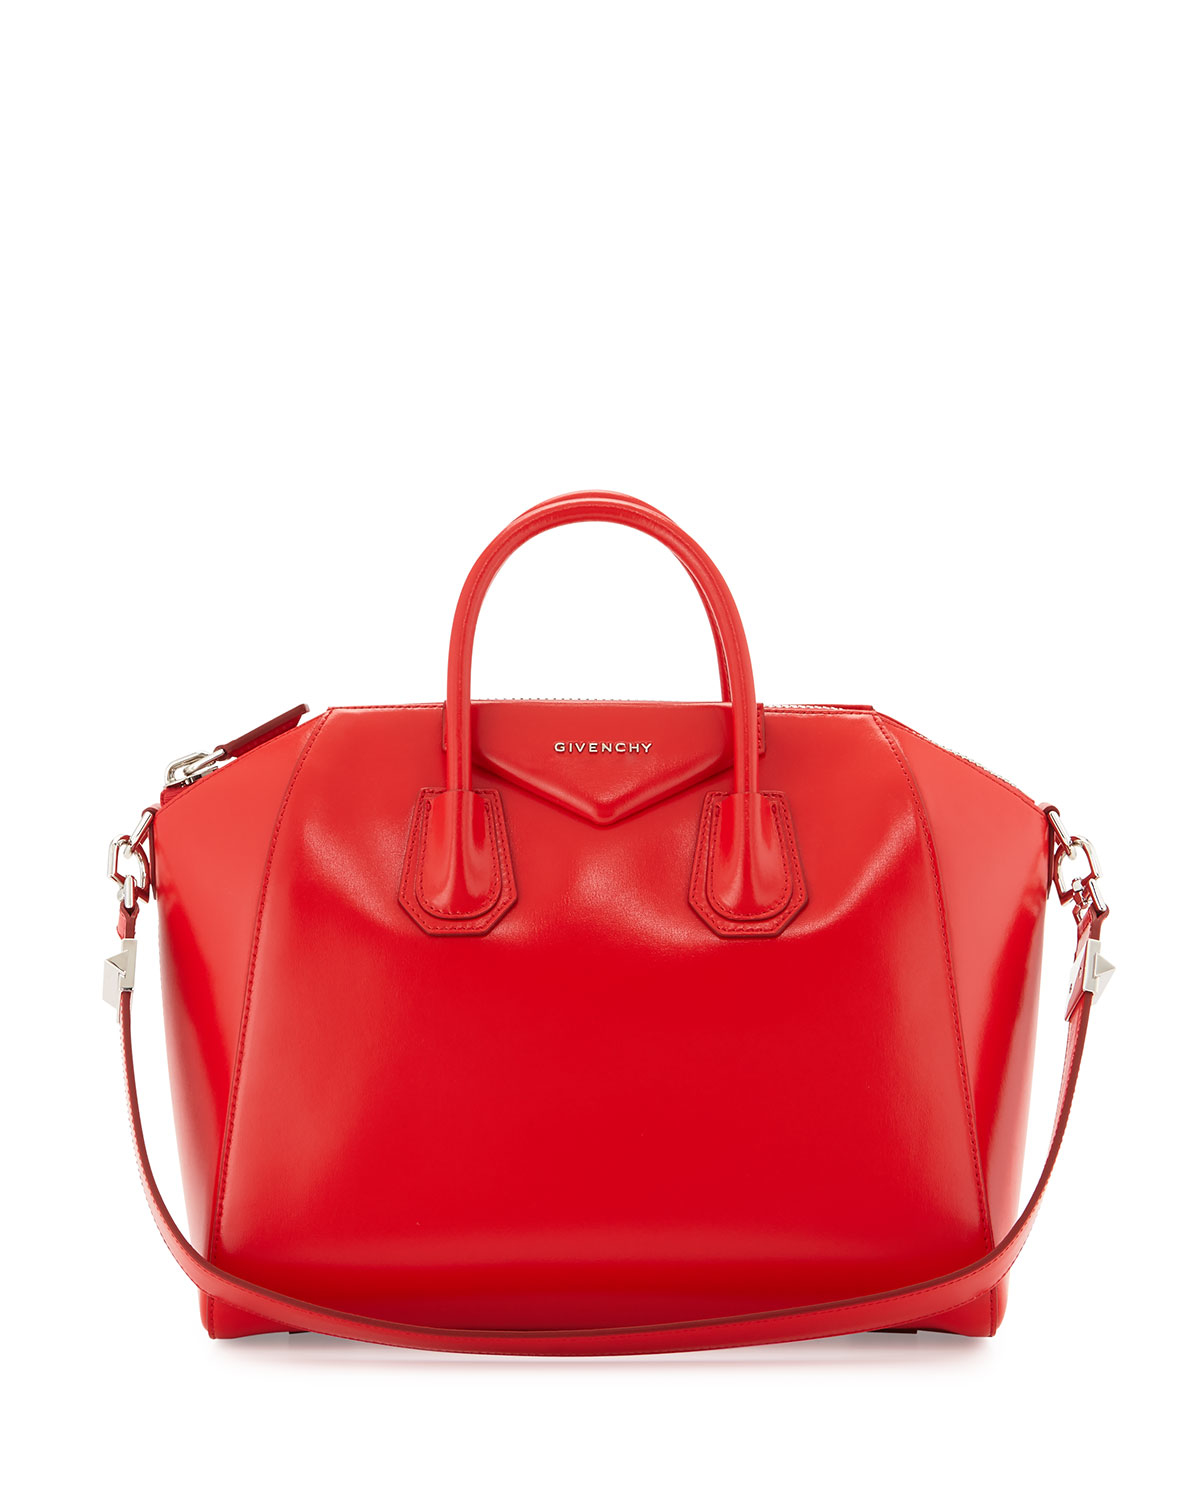 Lyst - Givenchy Antigona Medium Satchel Bag in Red